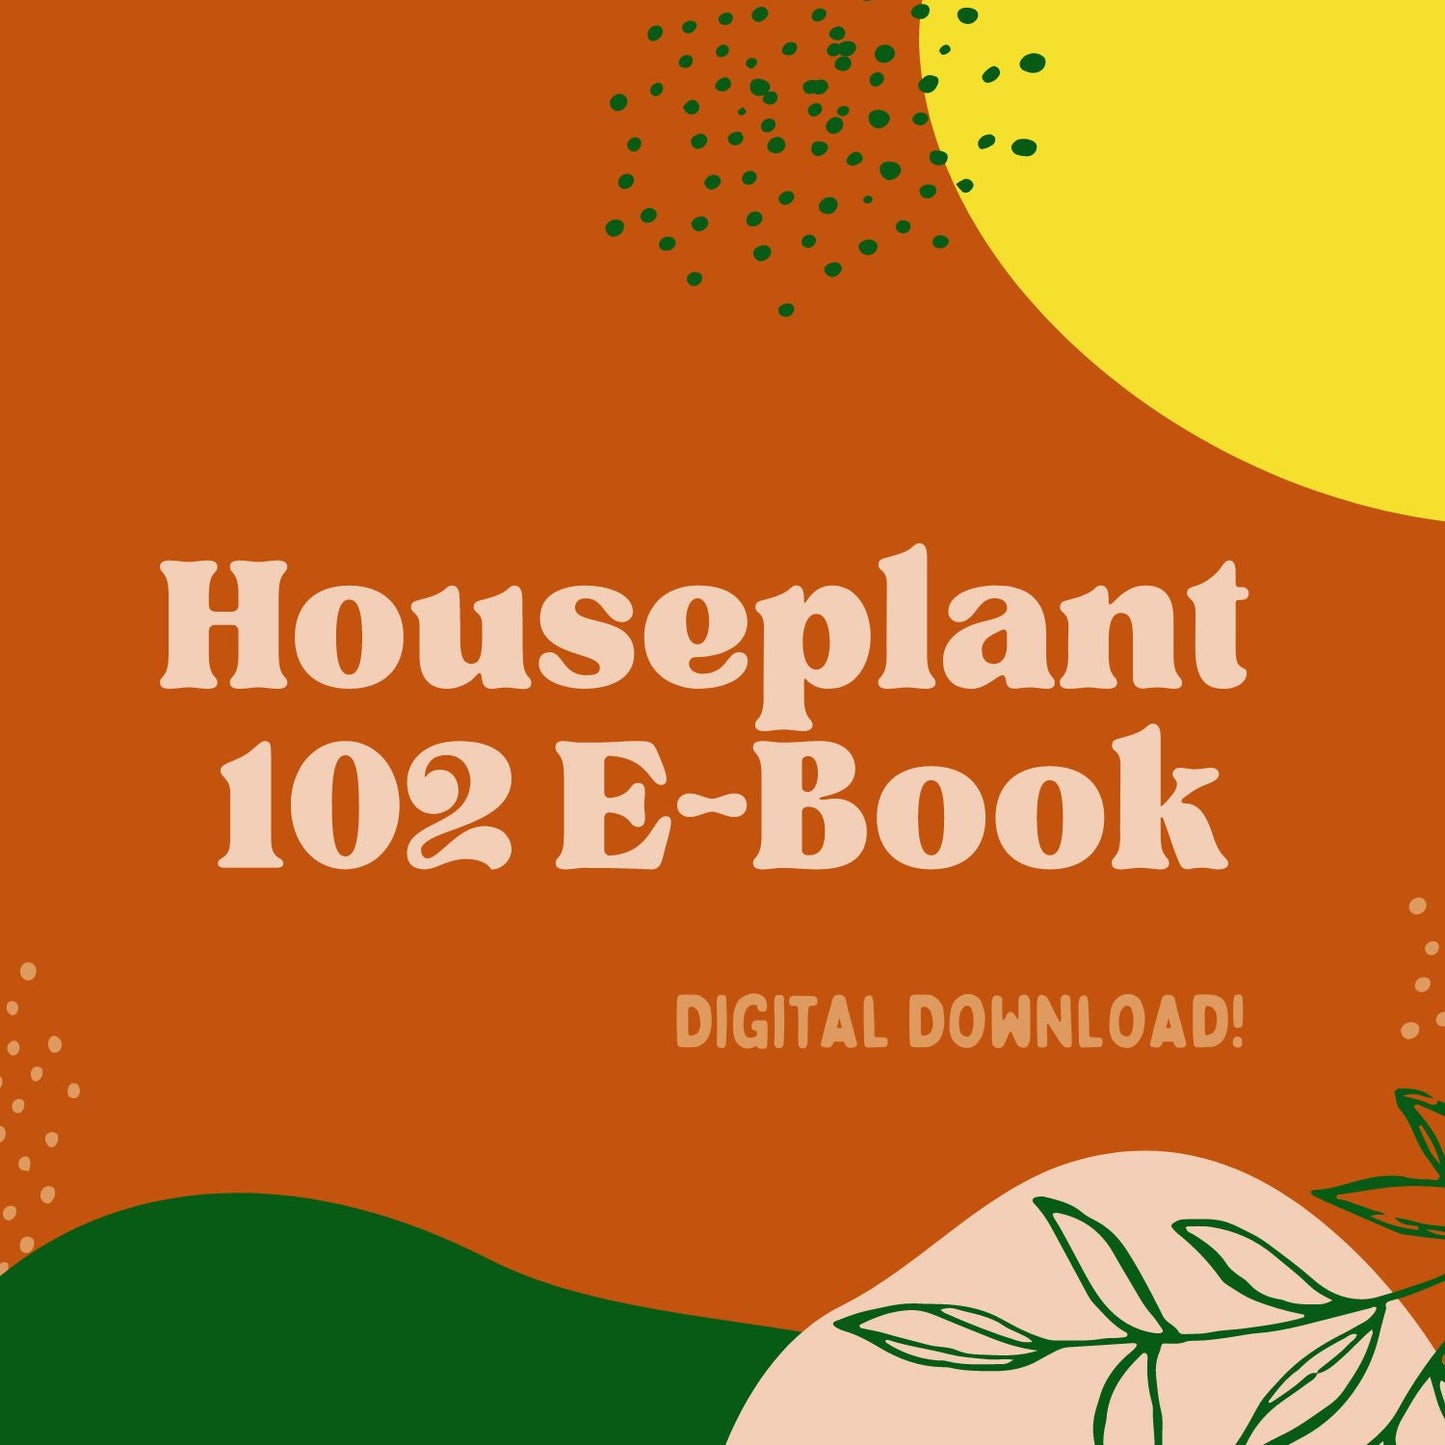 Houseplant 102 E-Book